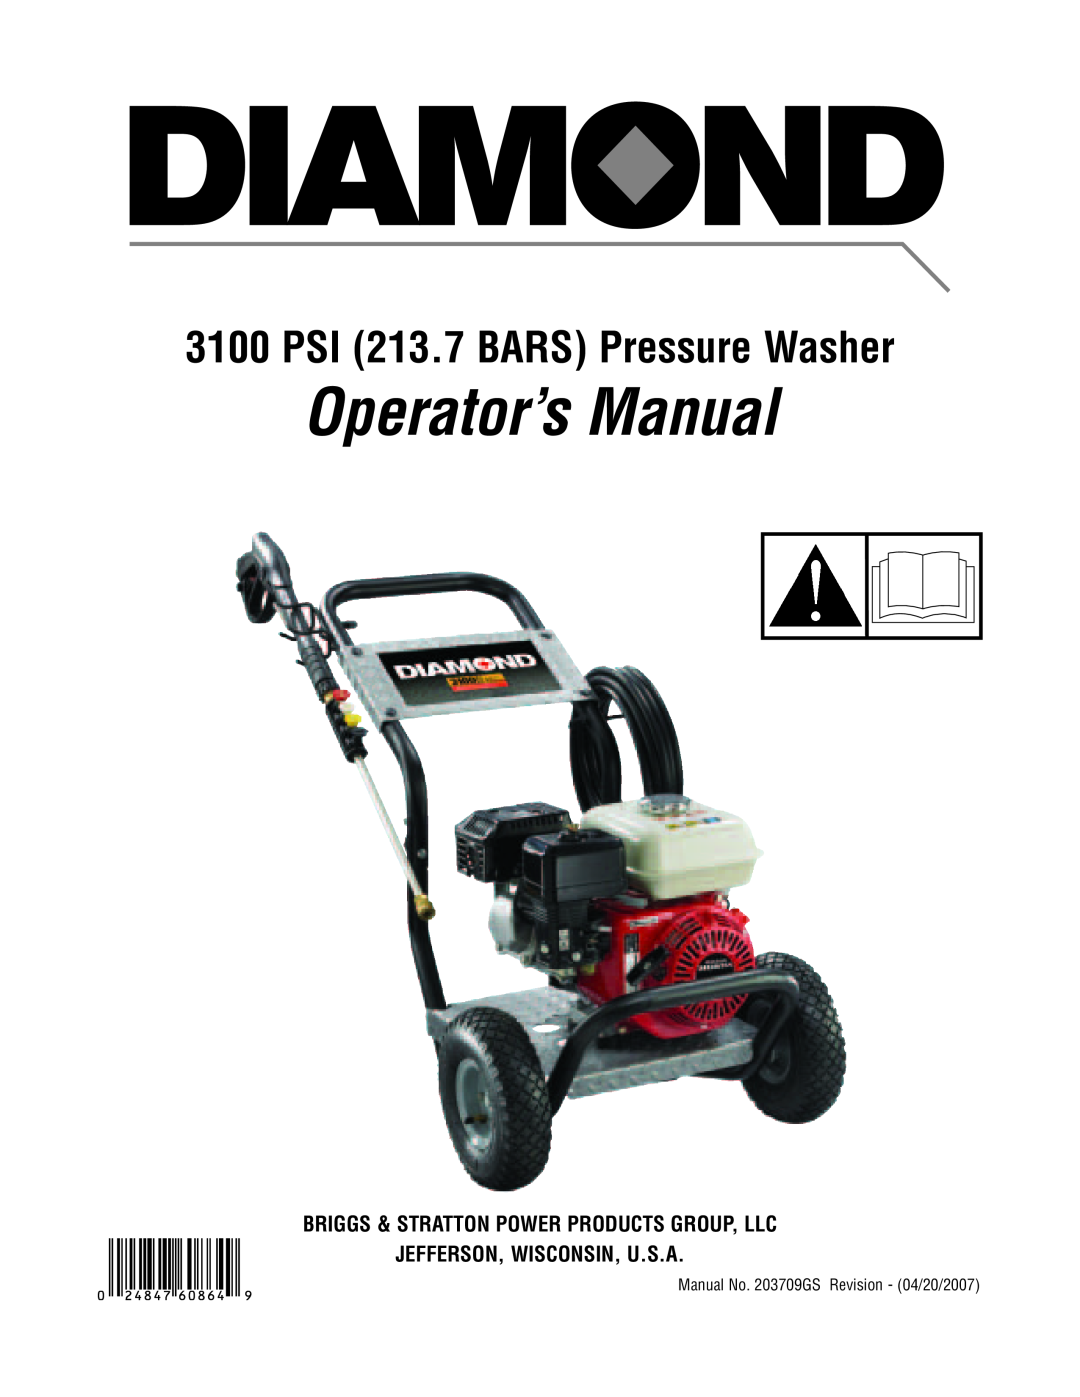 Diamond Power Products 3100 Psi manual Operator’s Manual, PSI 213.7 BARS Pressure Washer, Jefferson, Wisconsin, U.S.A 